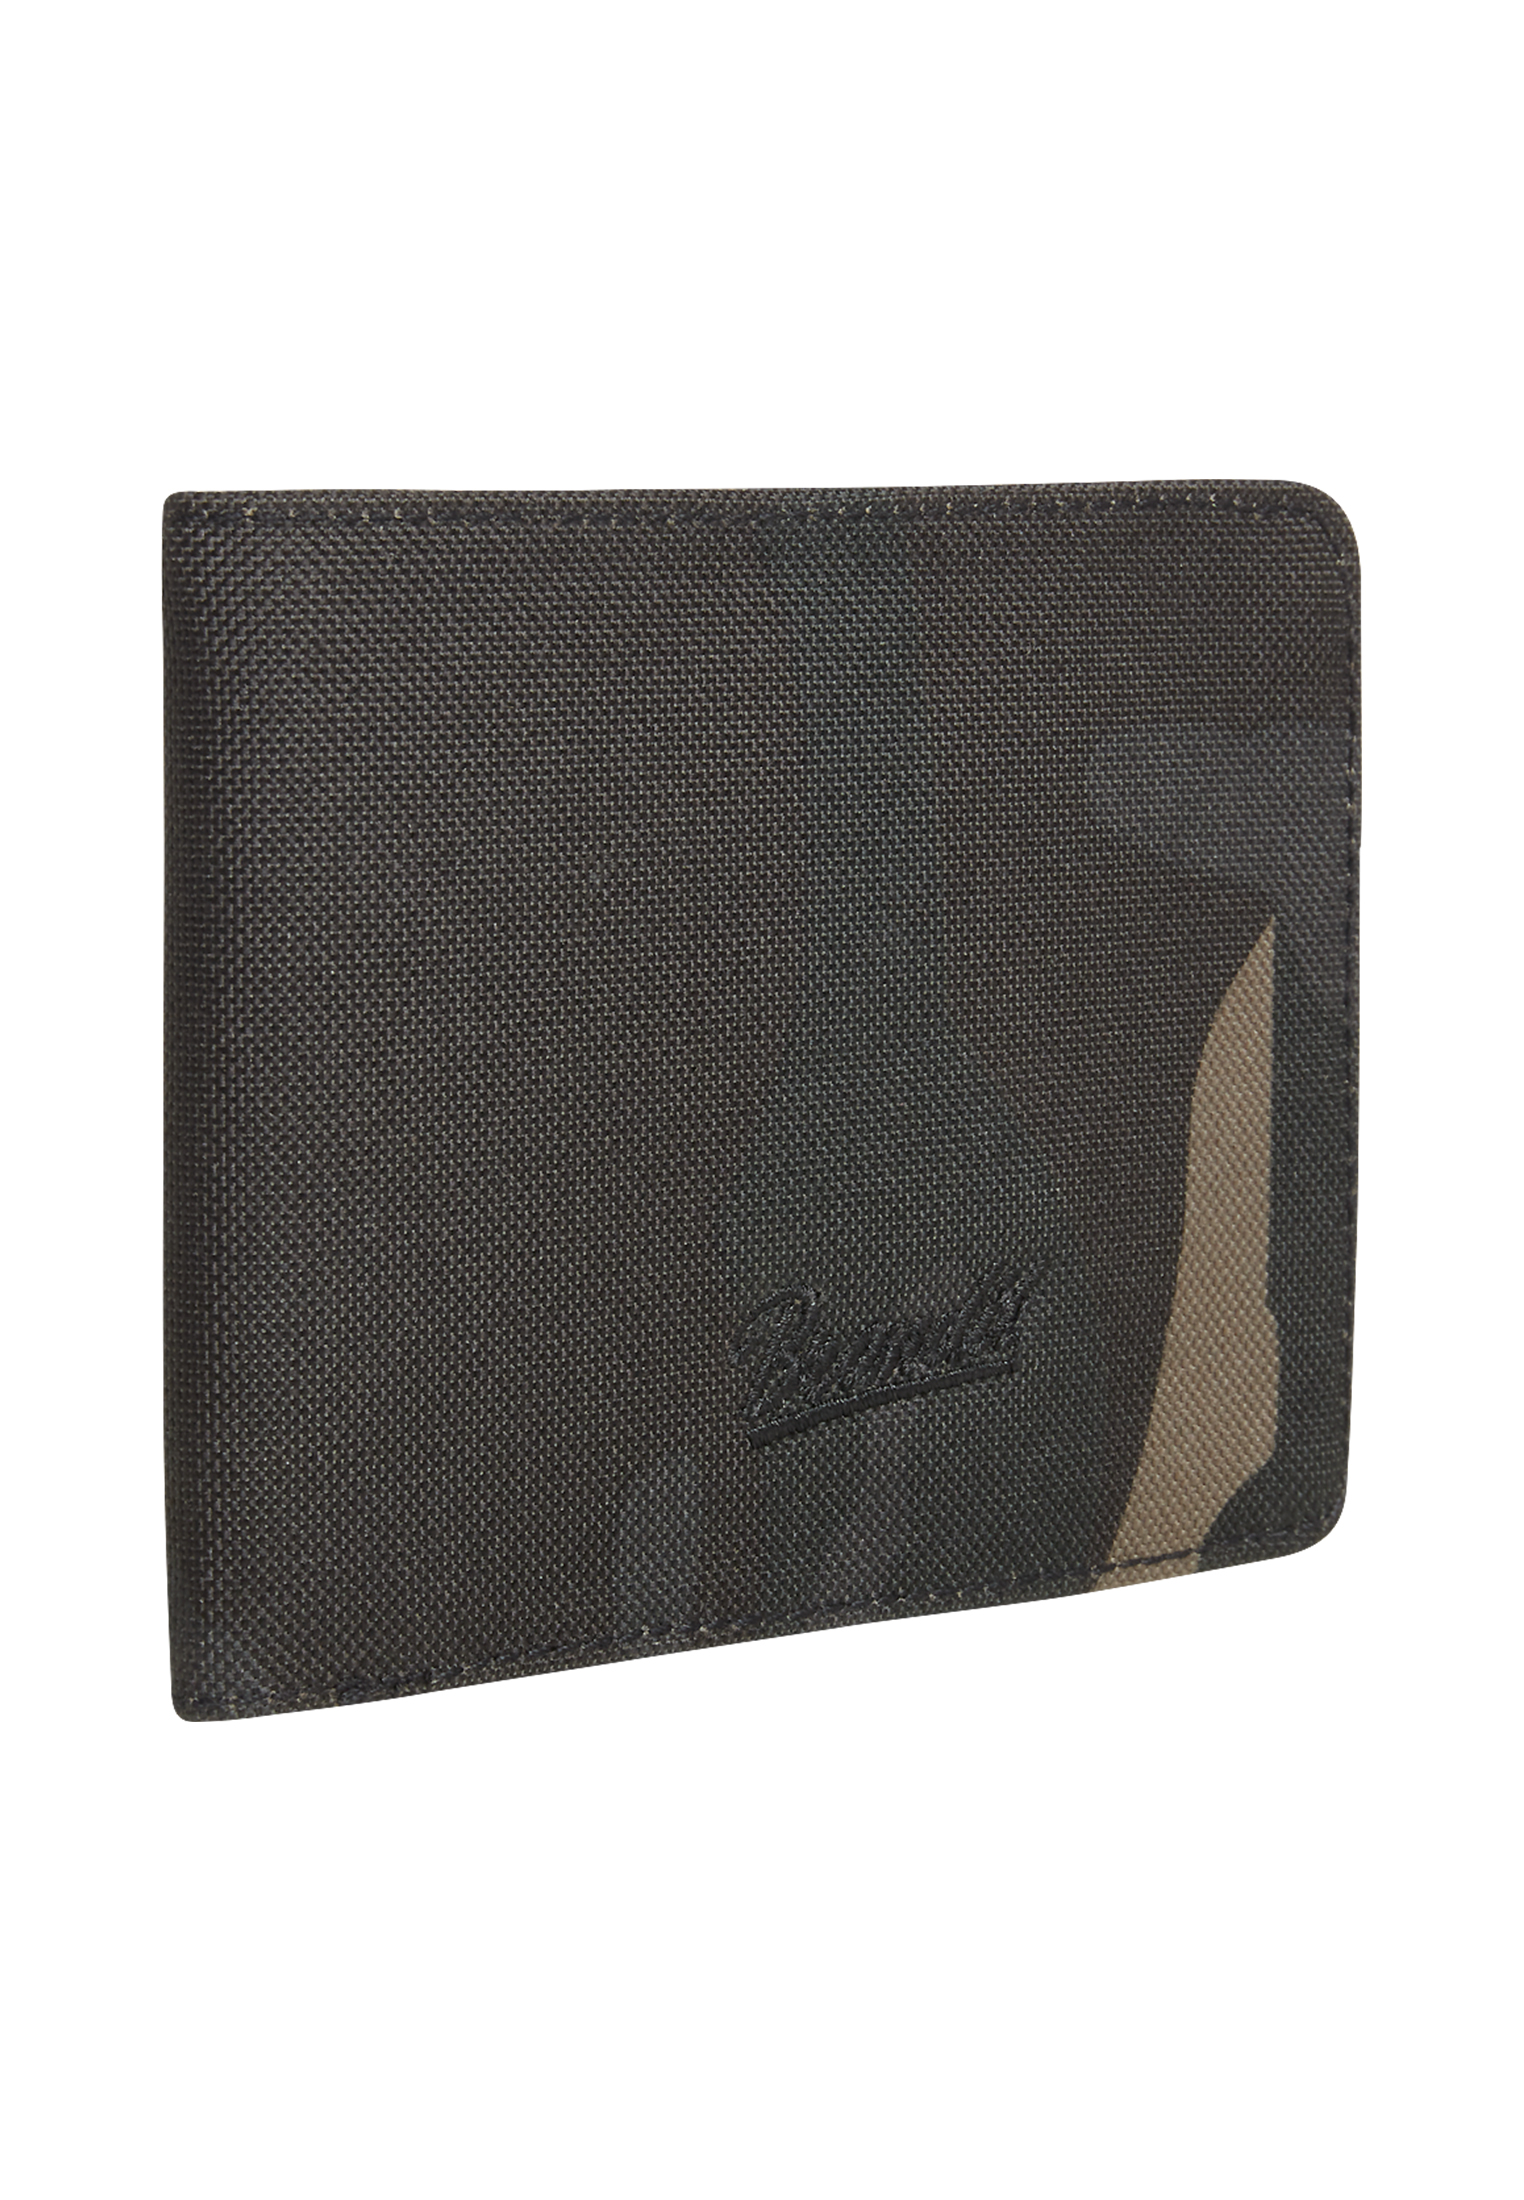 Accessoires wallet four in Farbe darkcamo